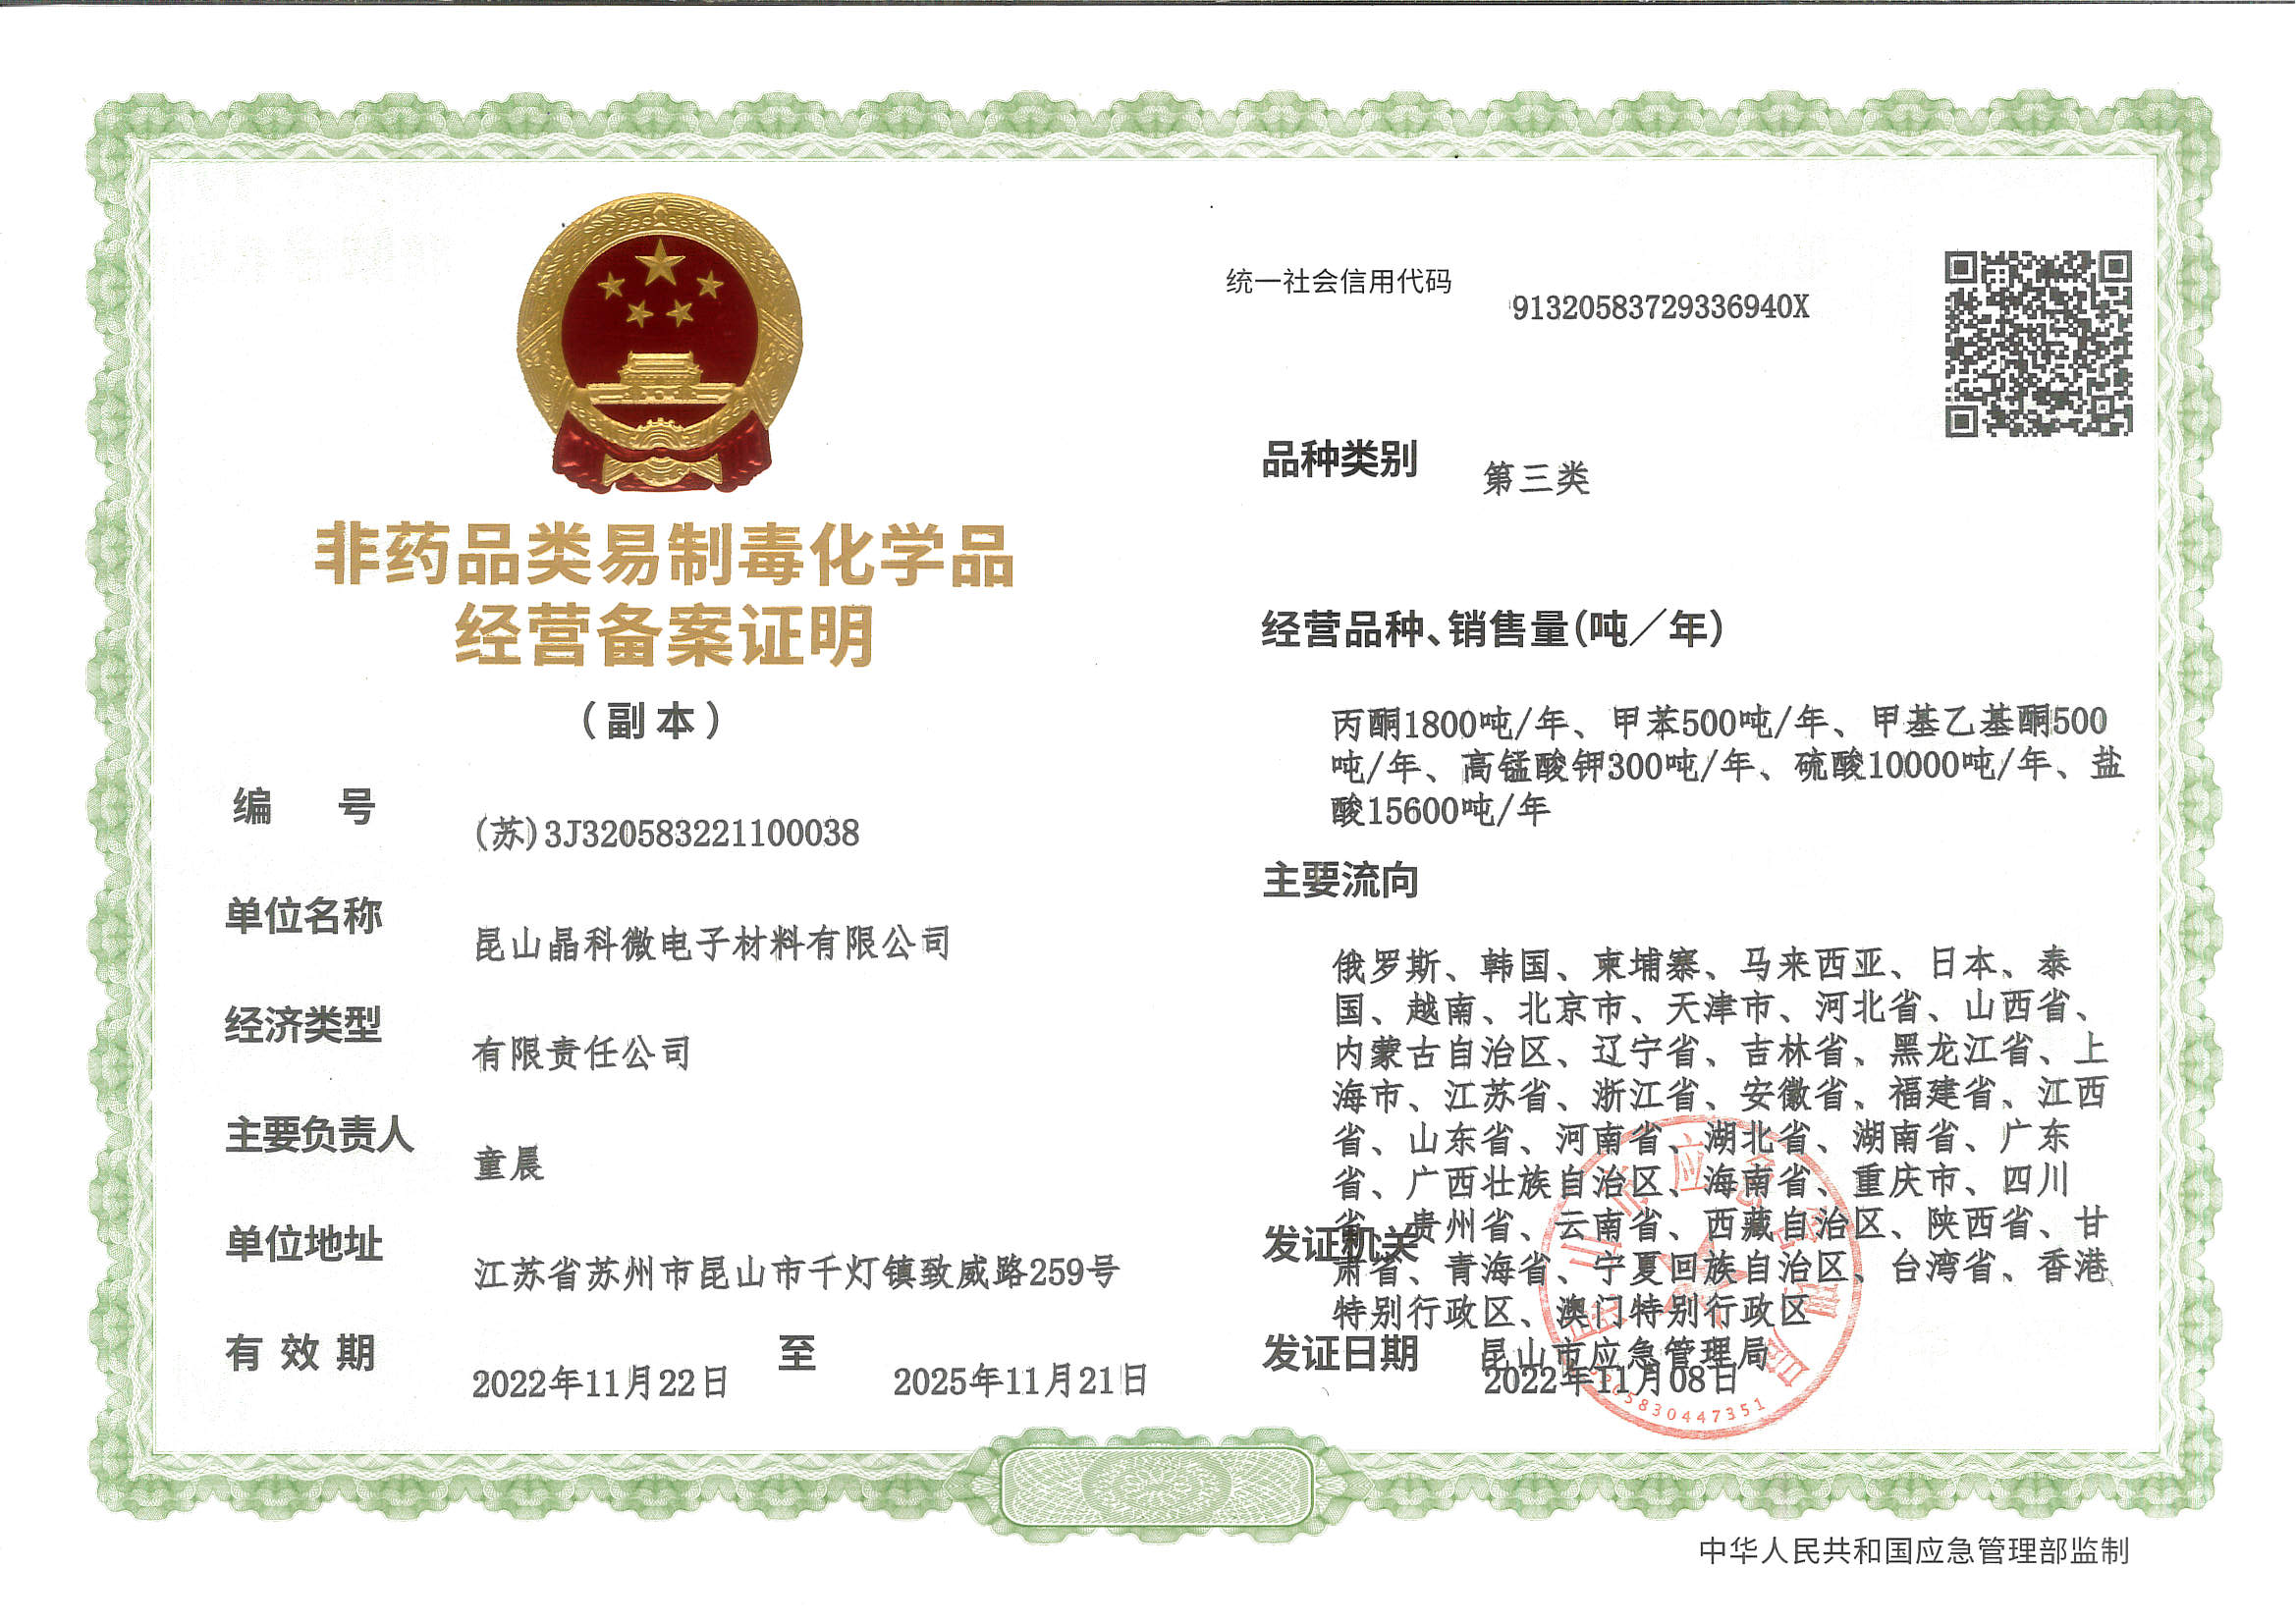 Non pharmaceutical precursor chemicals business registration certificate (Class III)